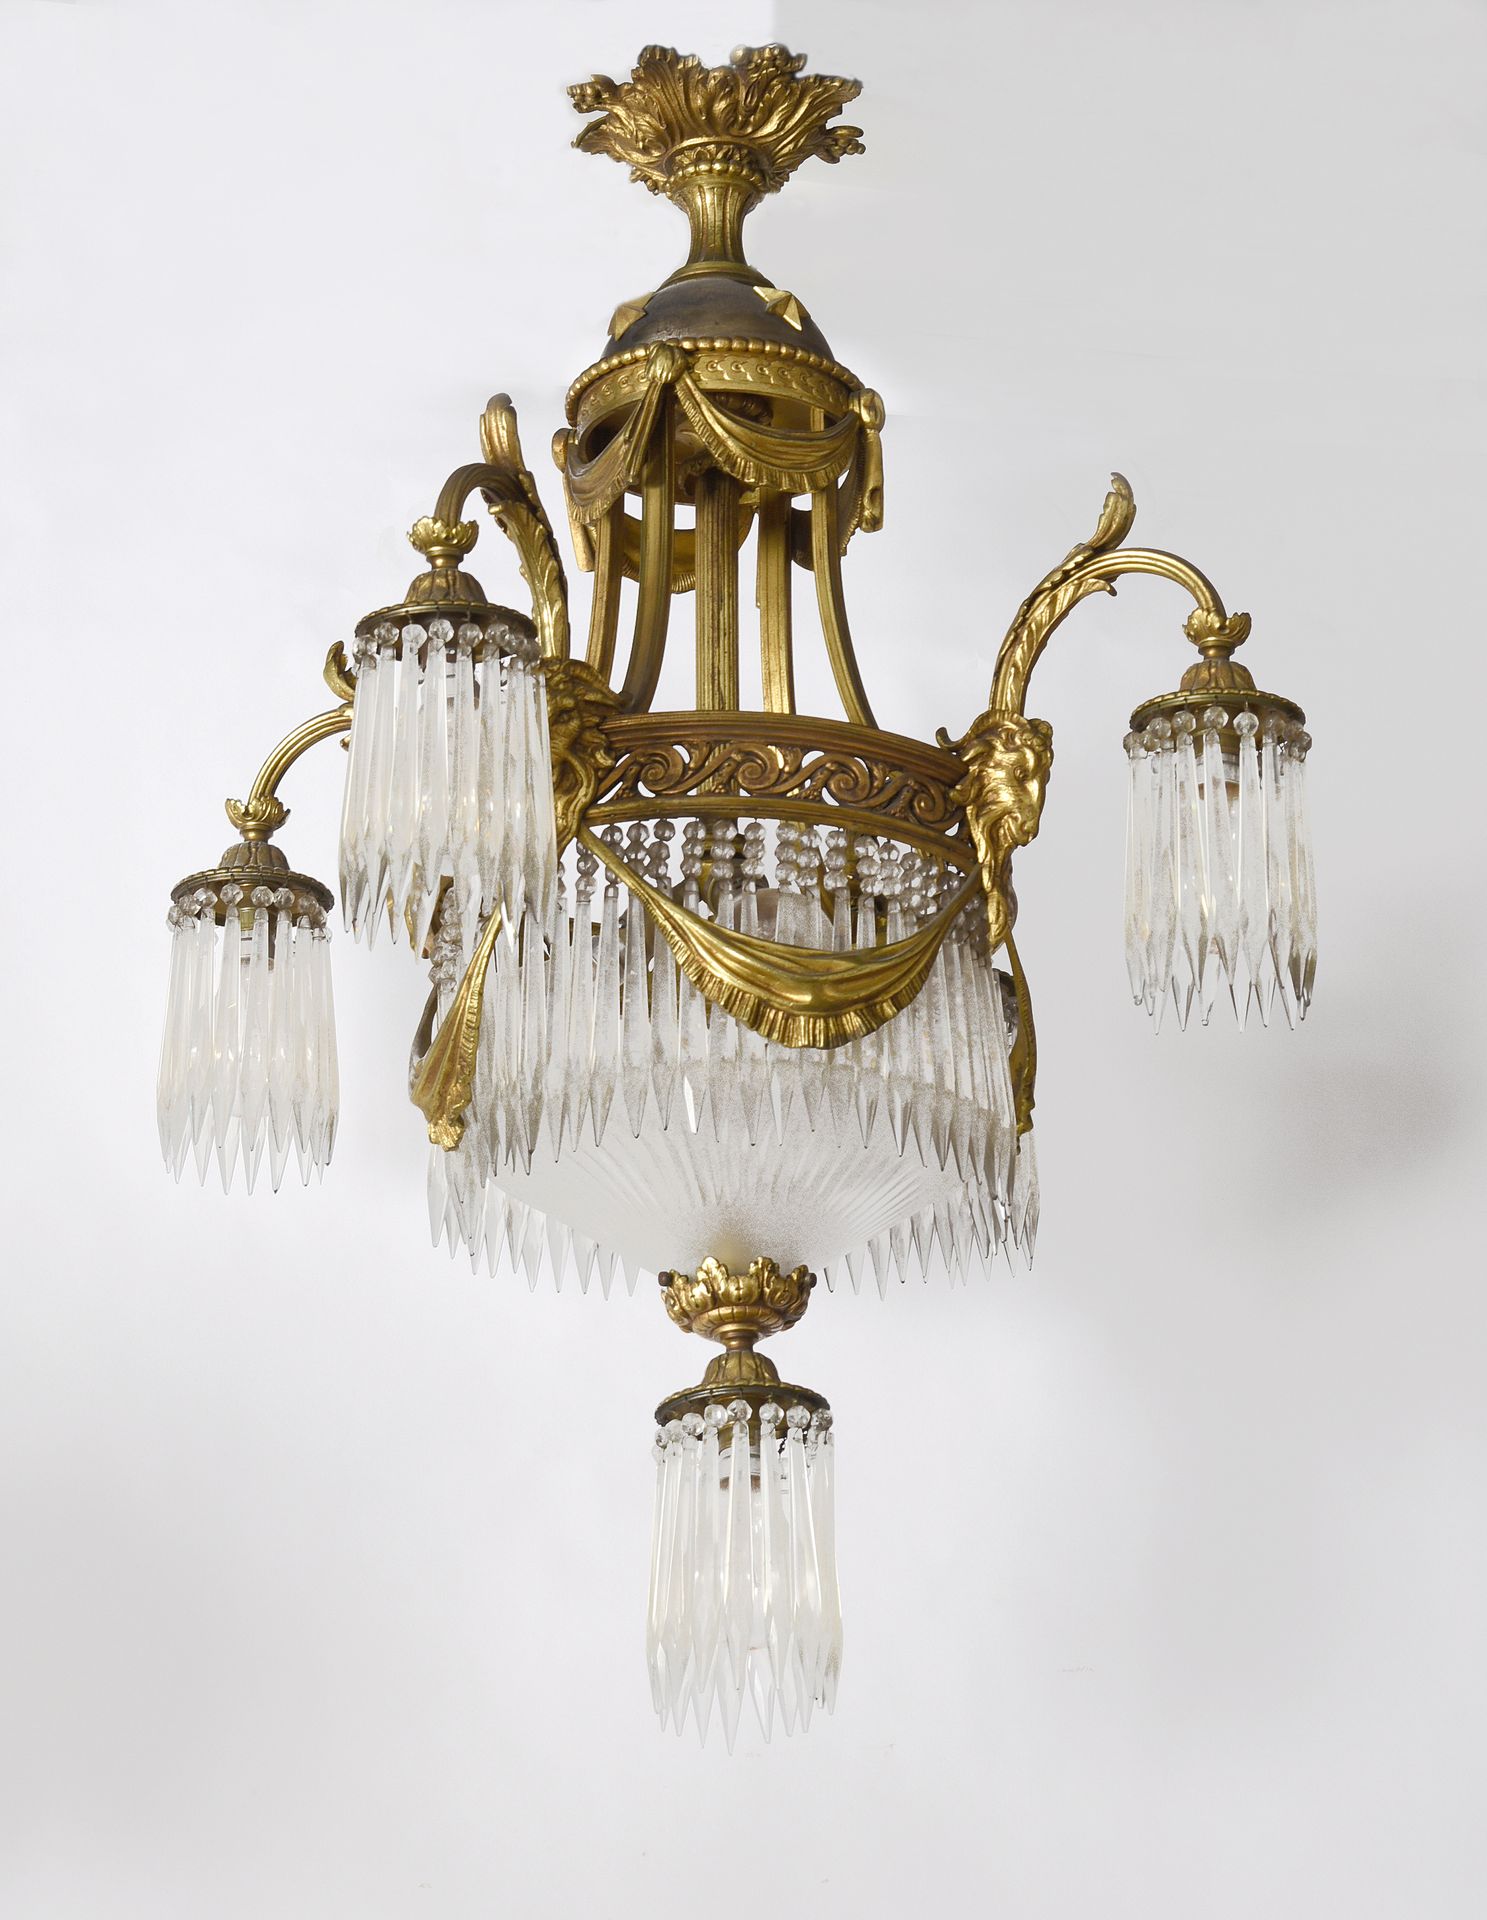 Null LUSTRE

鎏金青铜，有六个灯，四个手臂围绕着一个装饰有公羊头的篮子。

水晶吊坠。

高约90厘米